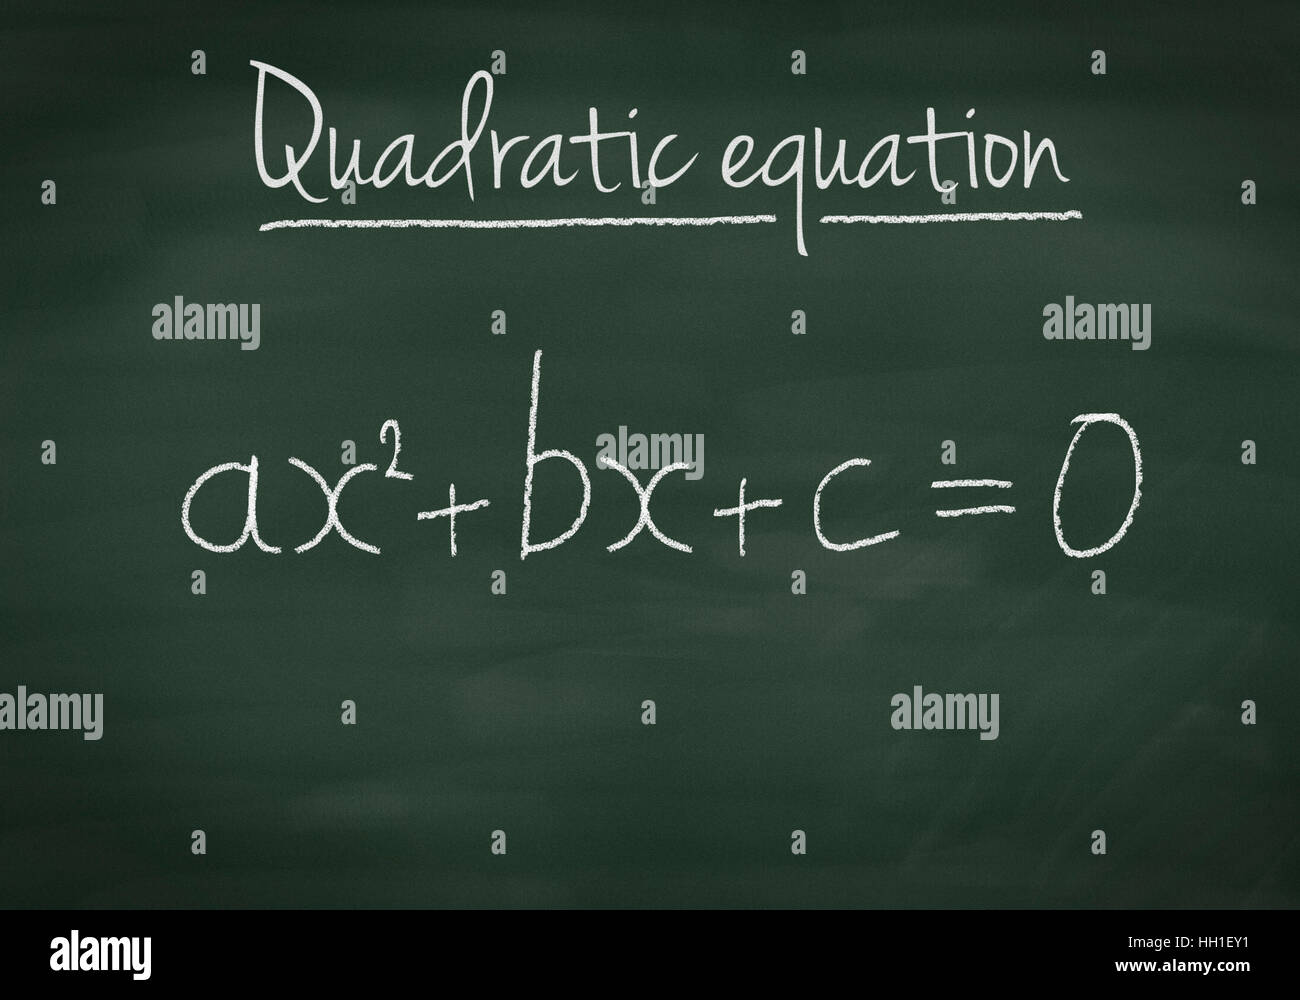 Quadratic equation explained on a chalkboard Stock Photo